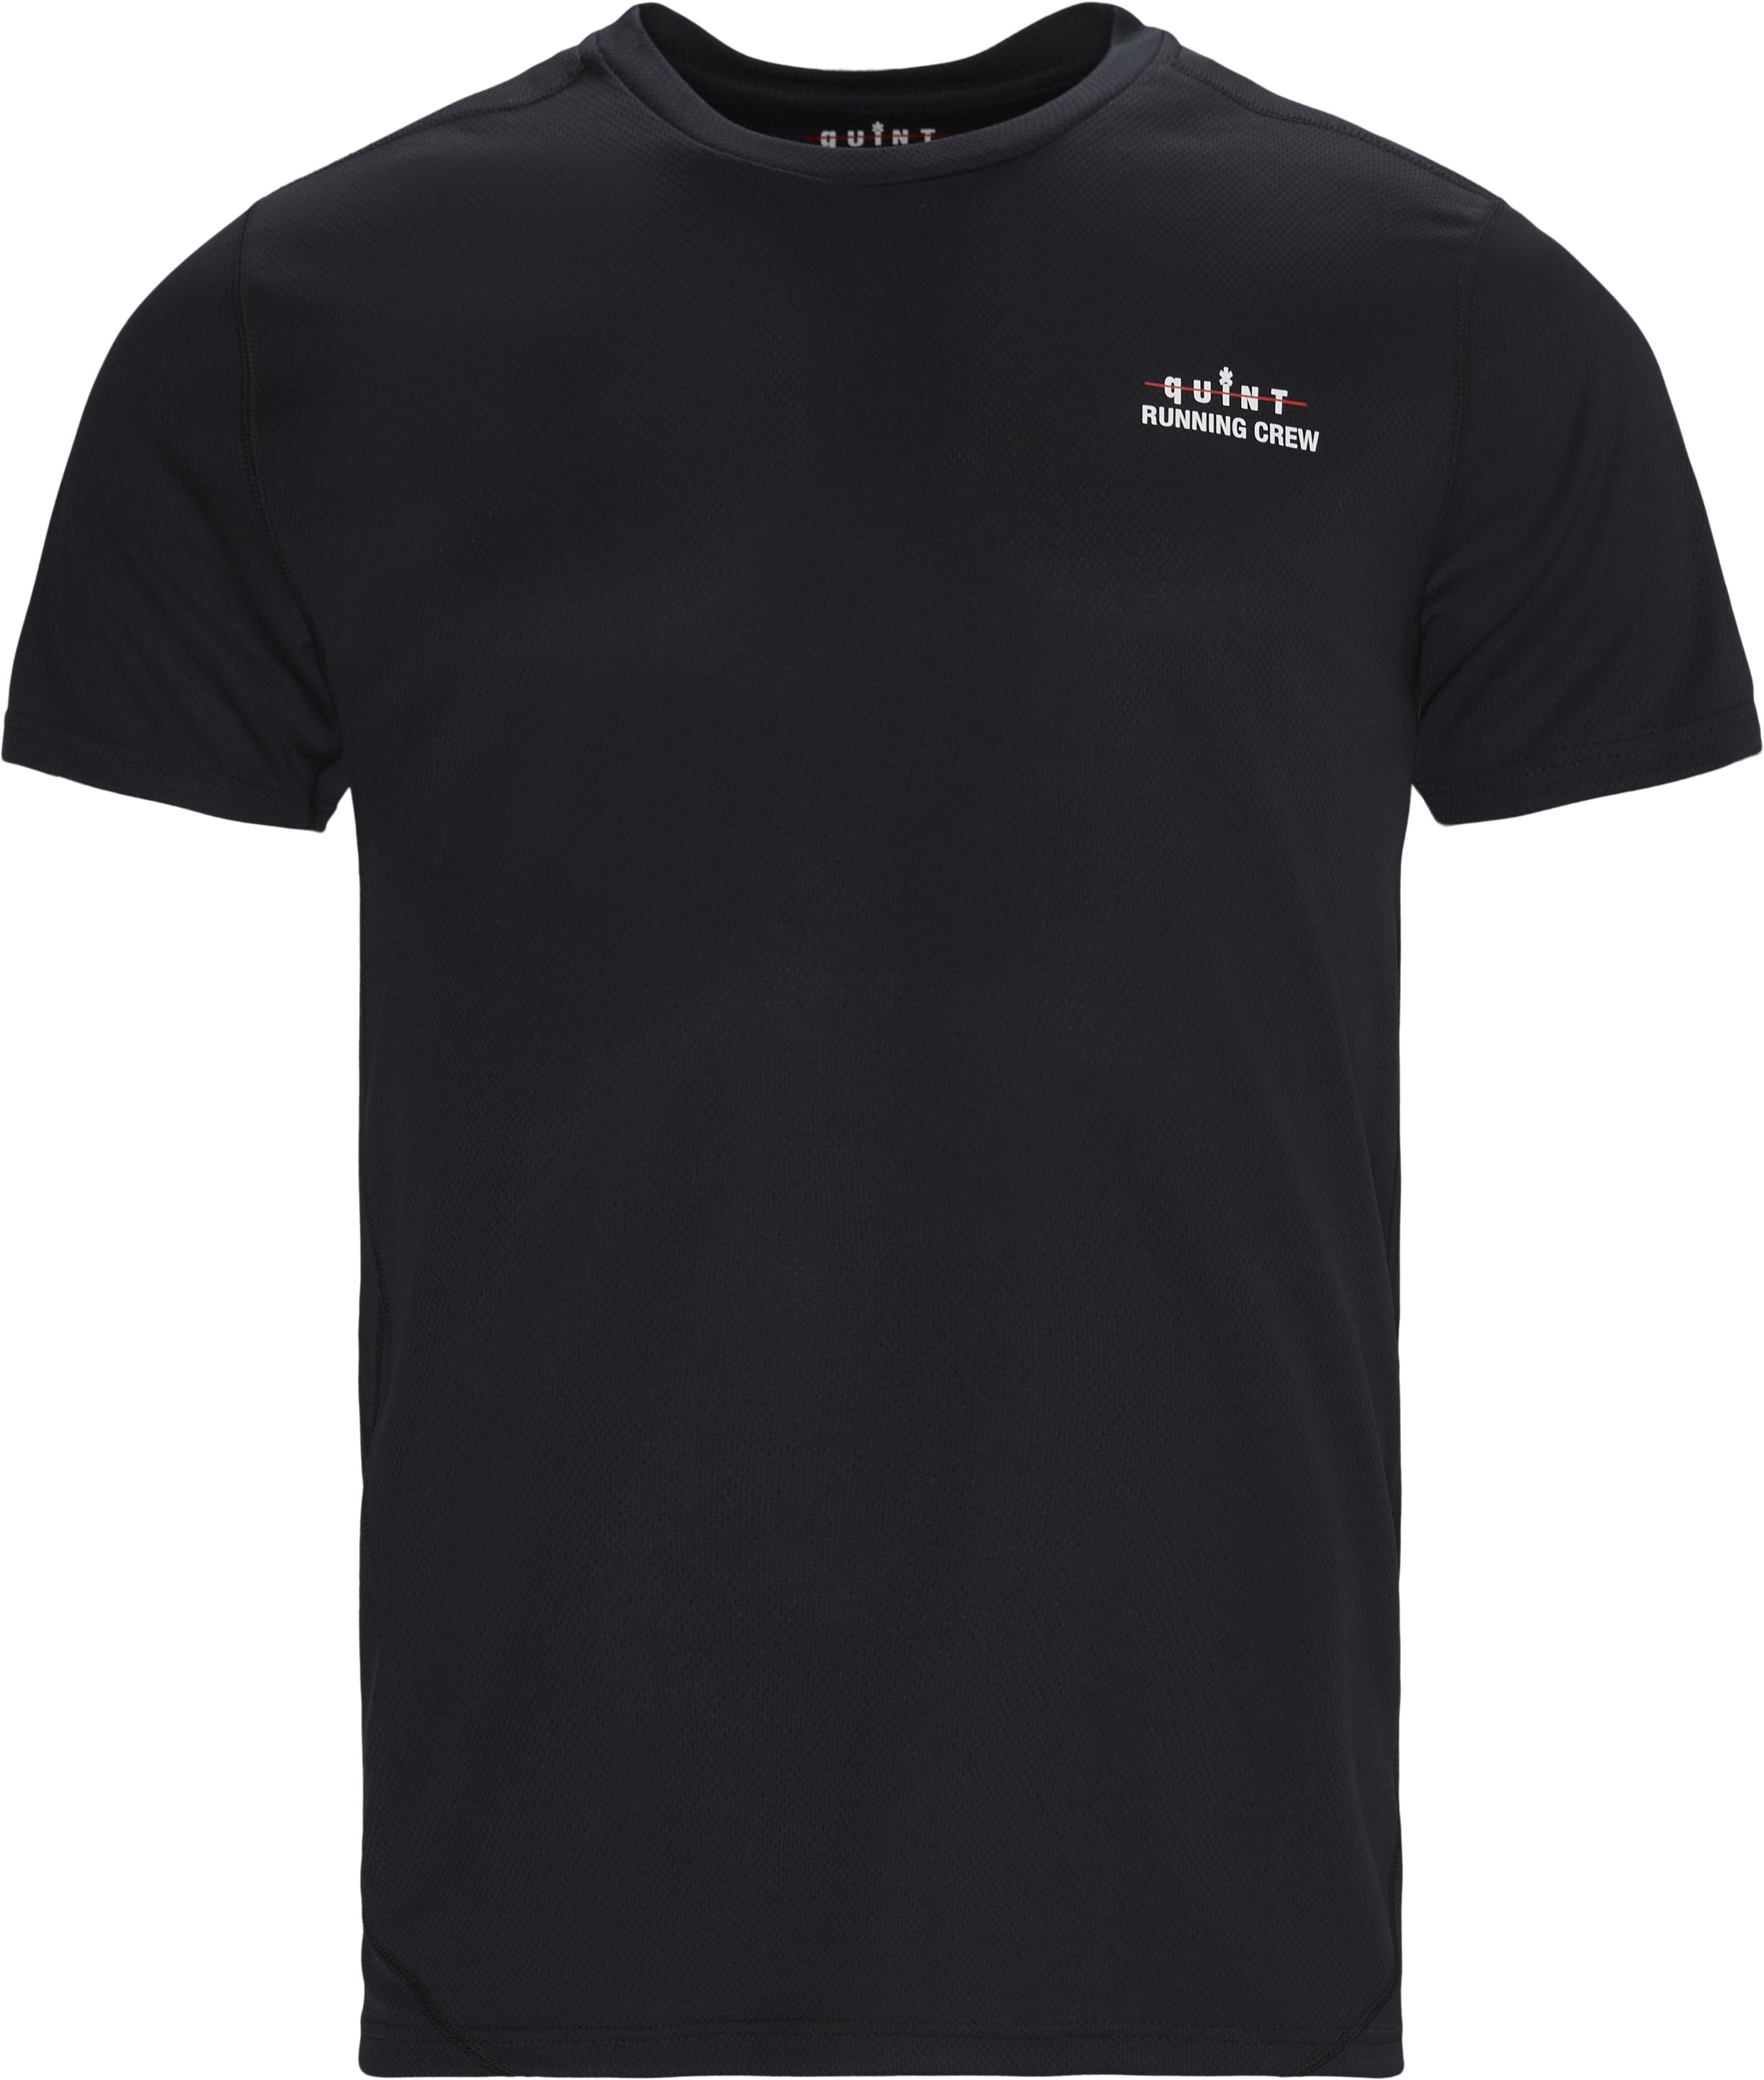 Quint Running Crew Troy Tee - T-shirts - Regular fit - Sort